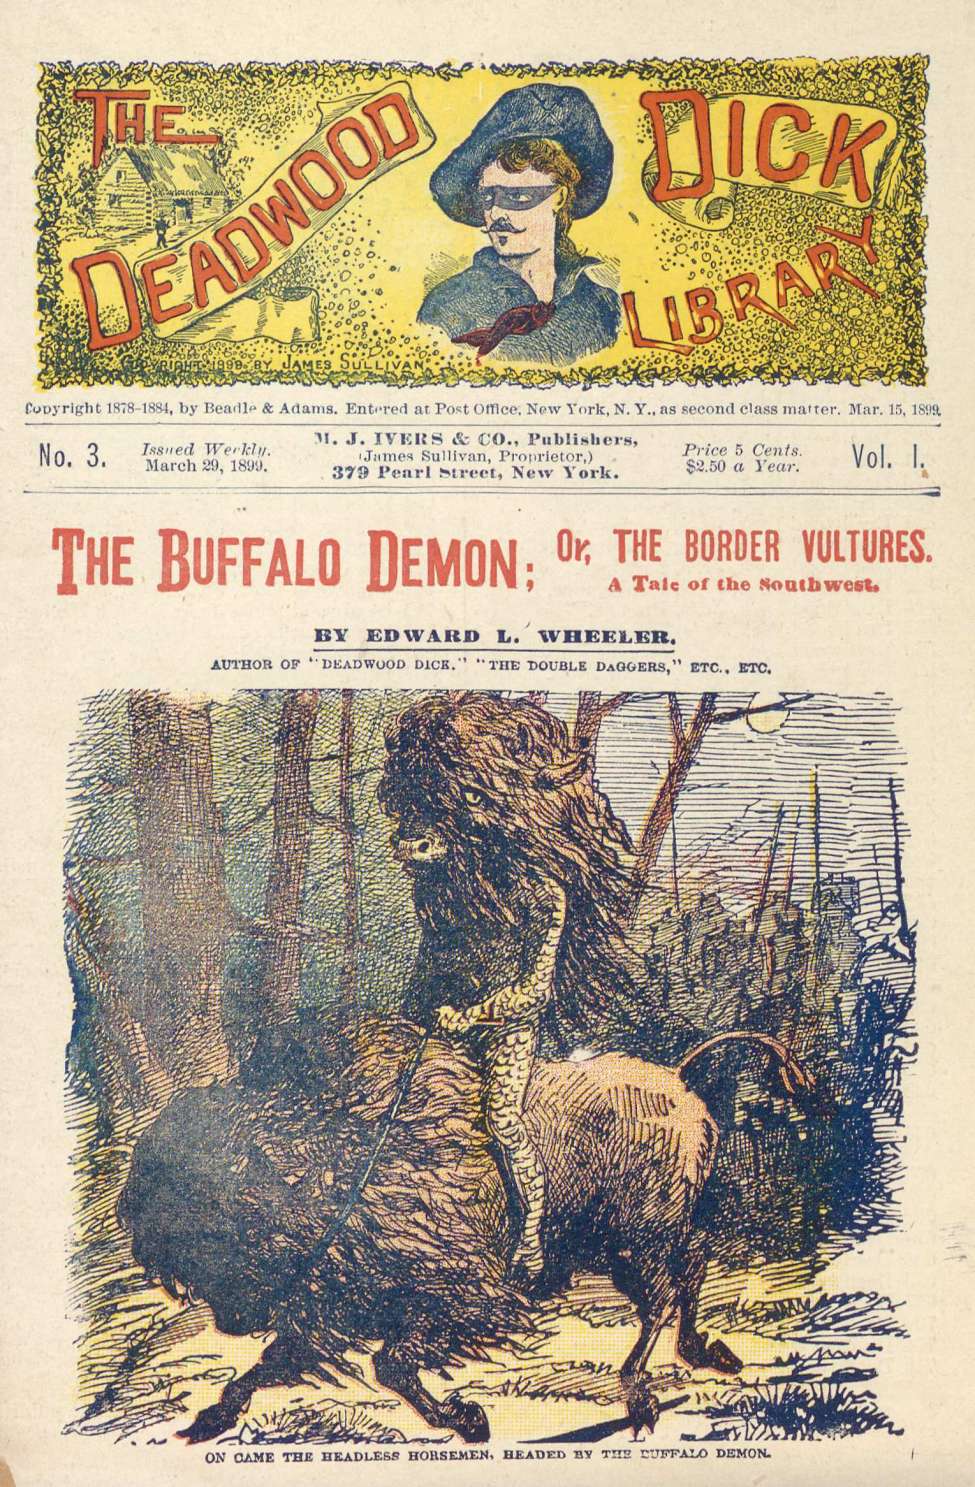 Book Cover For Deadwood Dick Library v1 3 - The Buffalo Demon